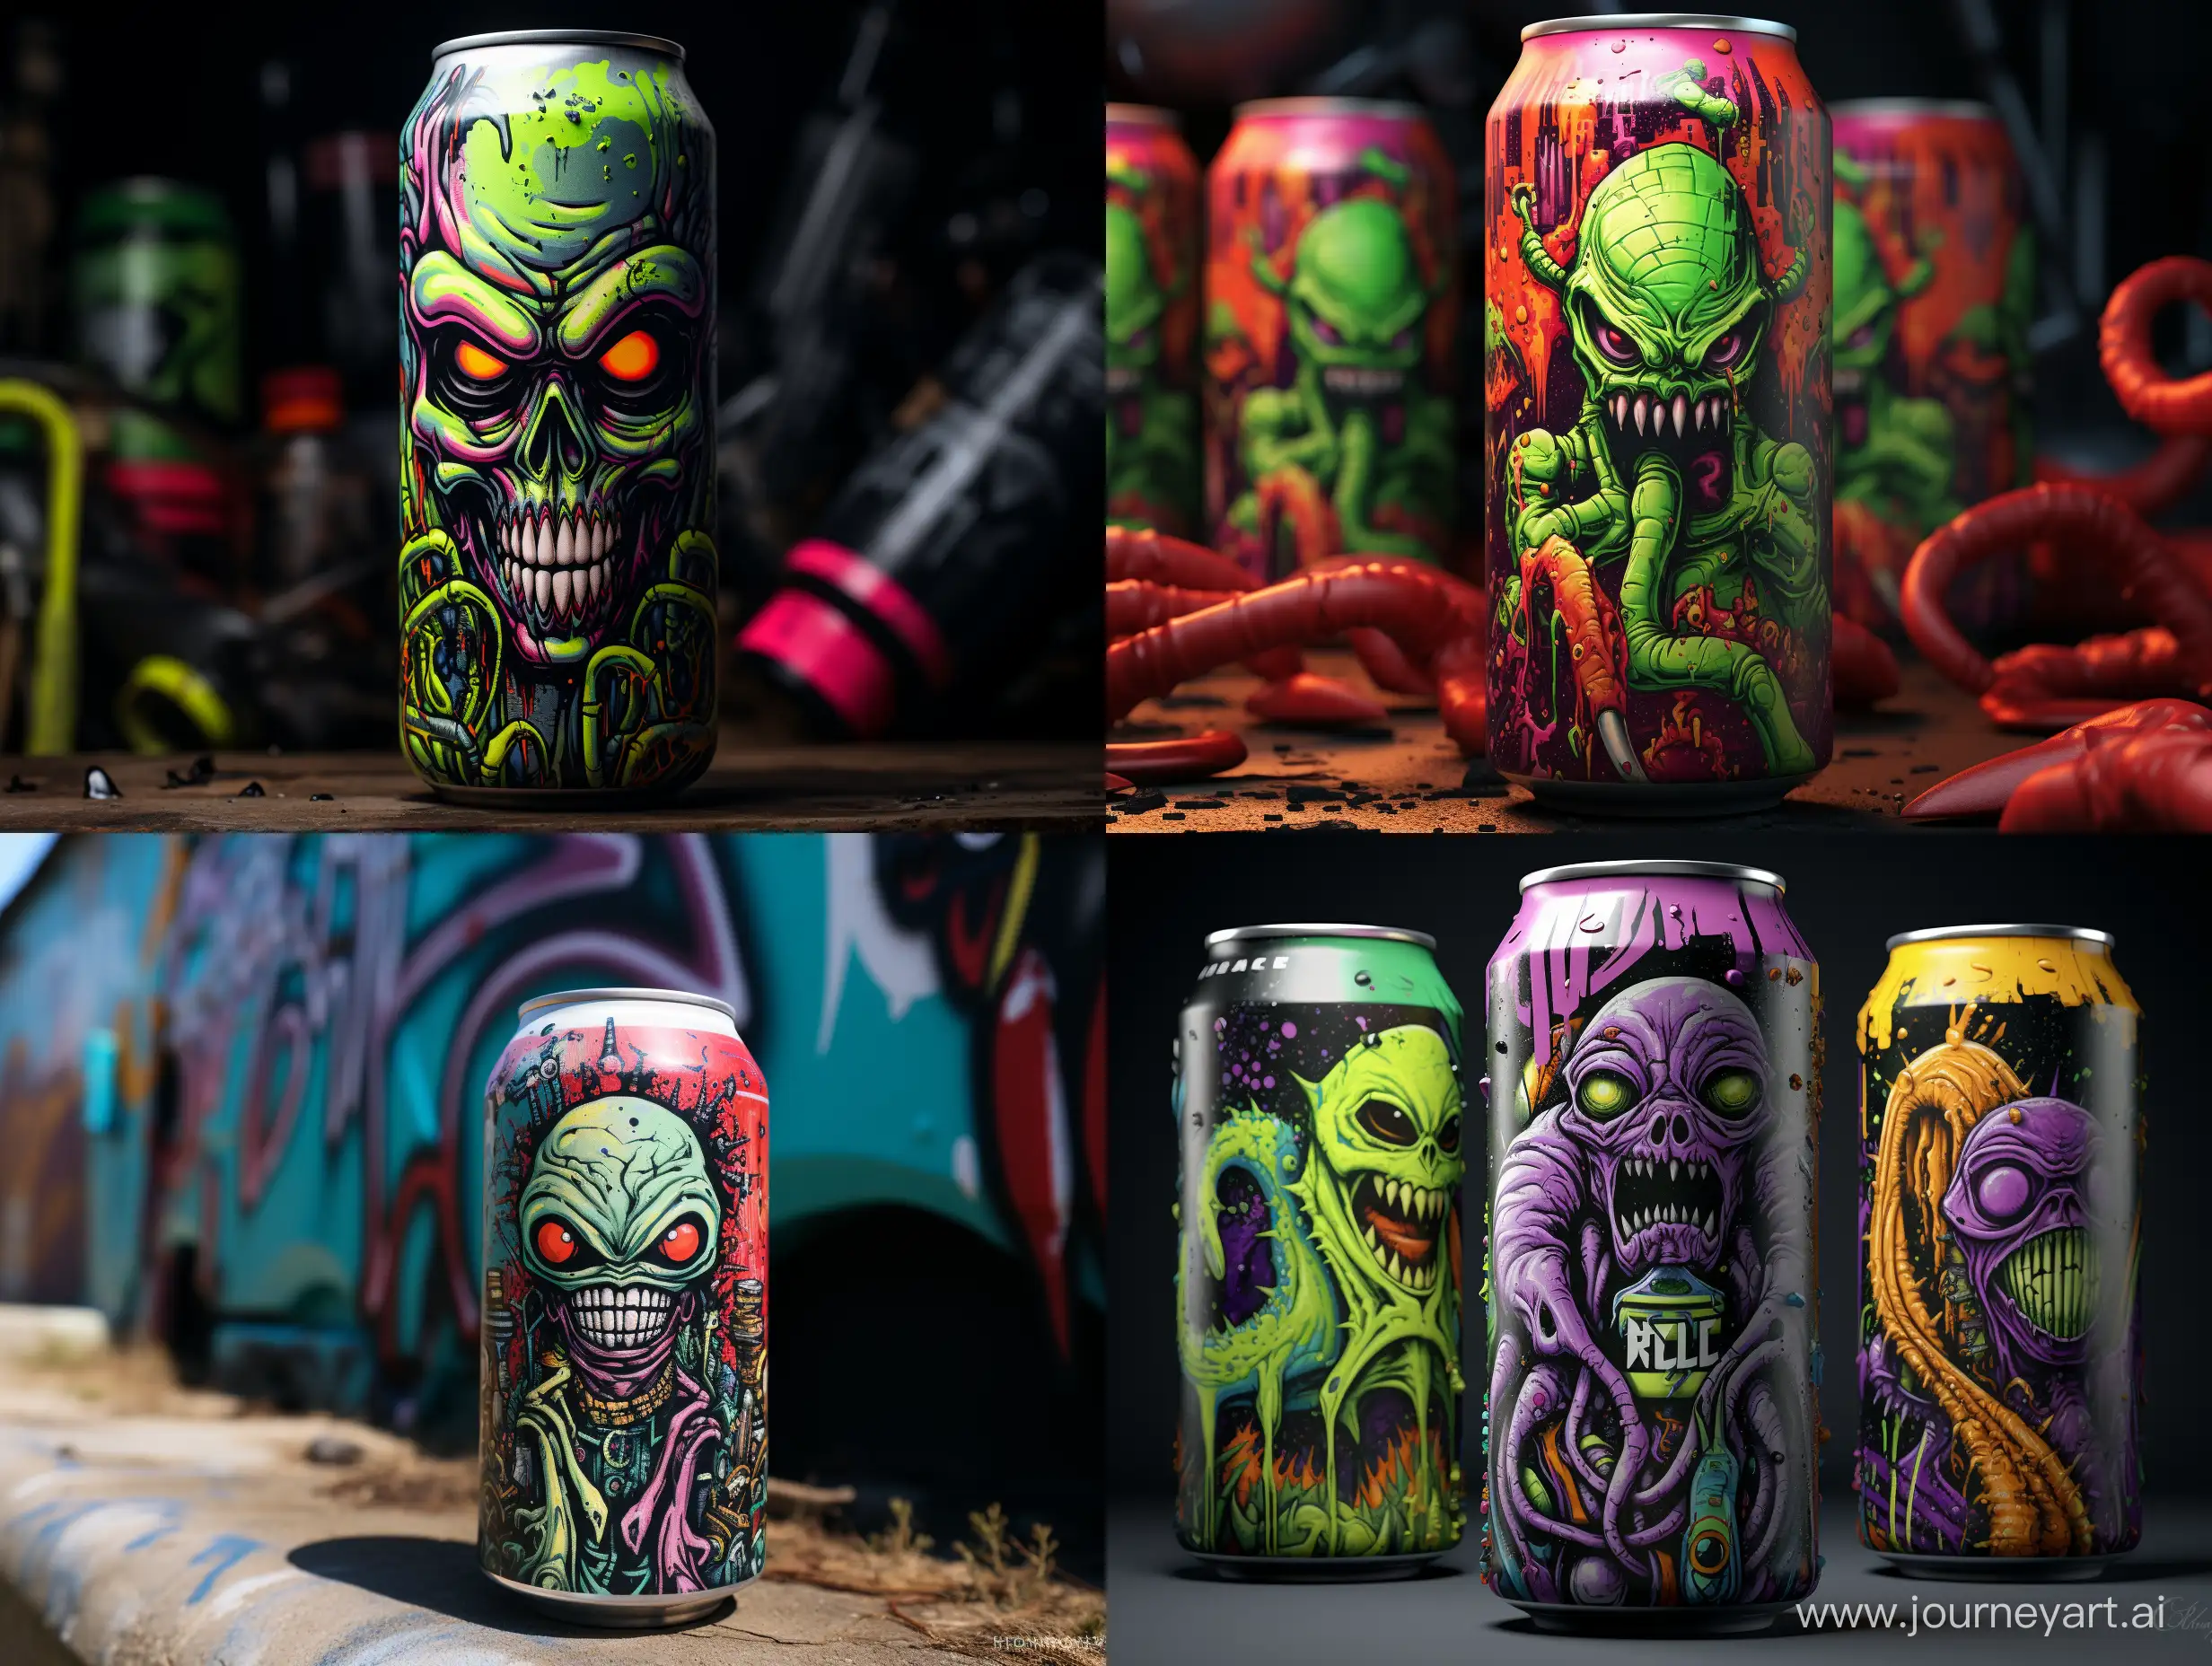 Extraterrestrial-Street-Art-with-Cosmic-Brew-Alien-Graffiti-in-43-Aspect-Ratio